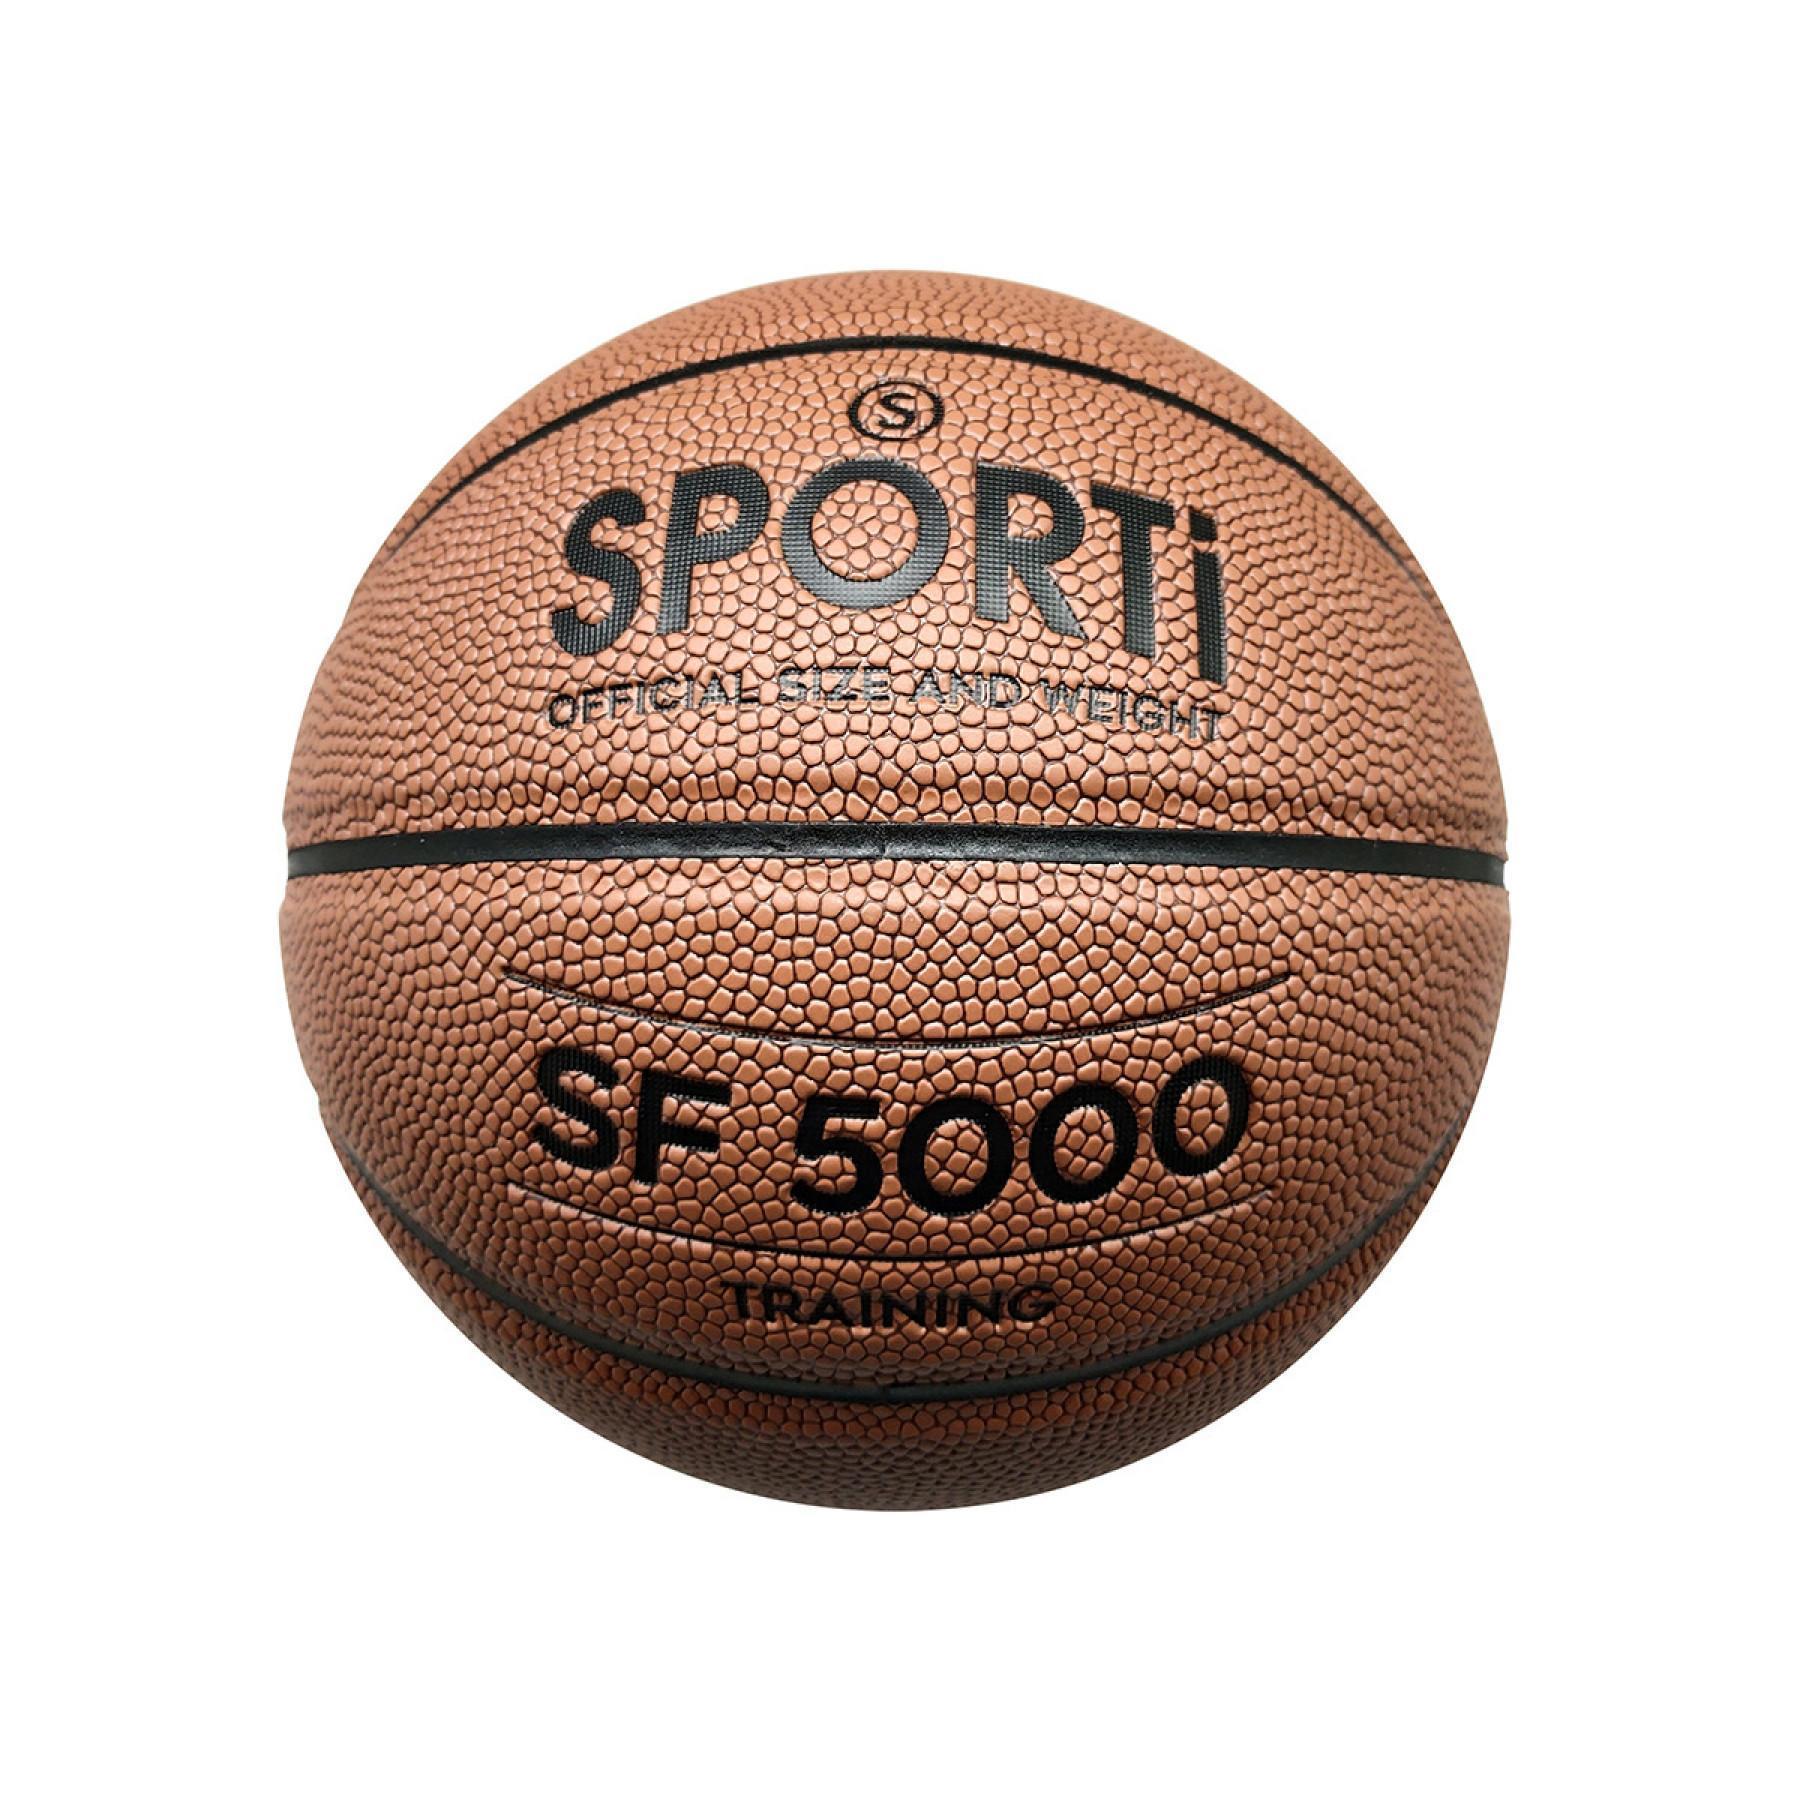 Cellulair basketbal Sporti France